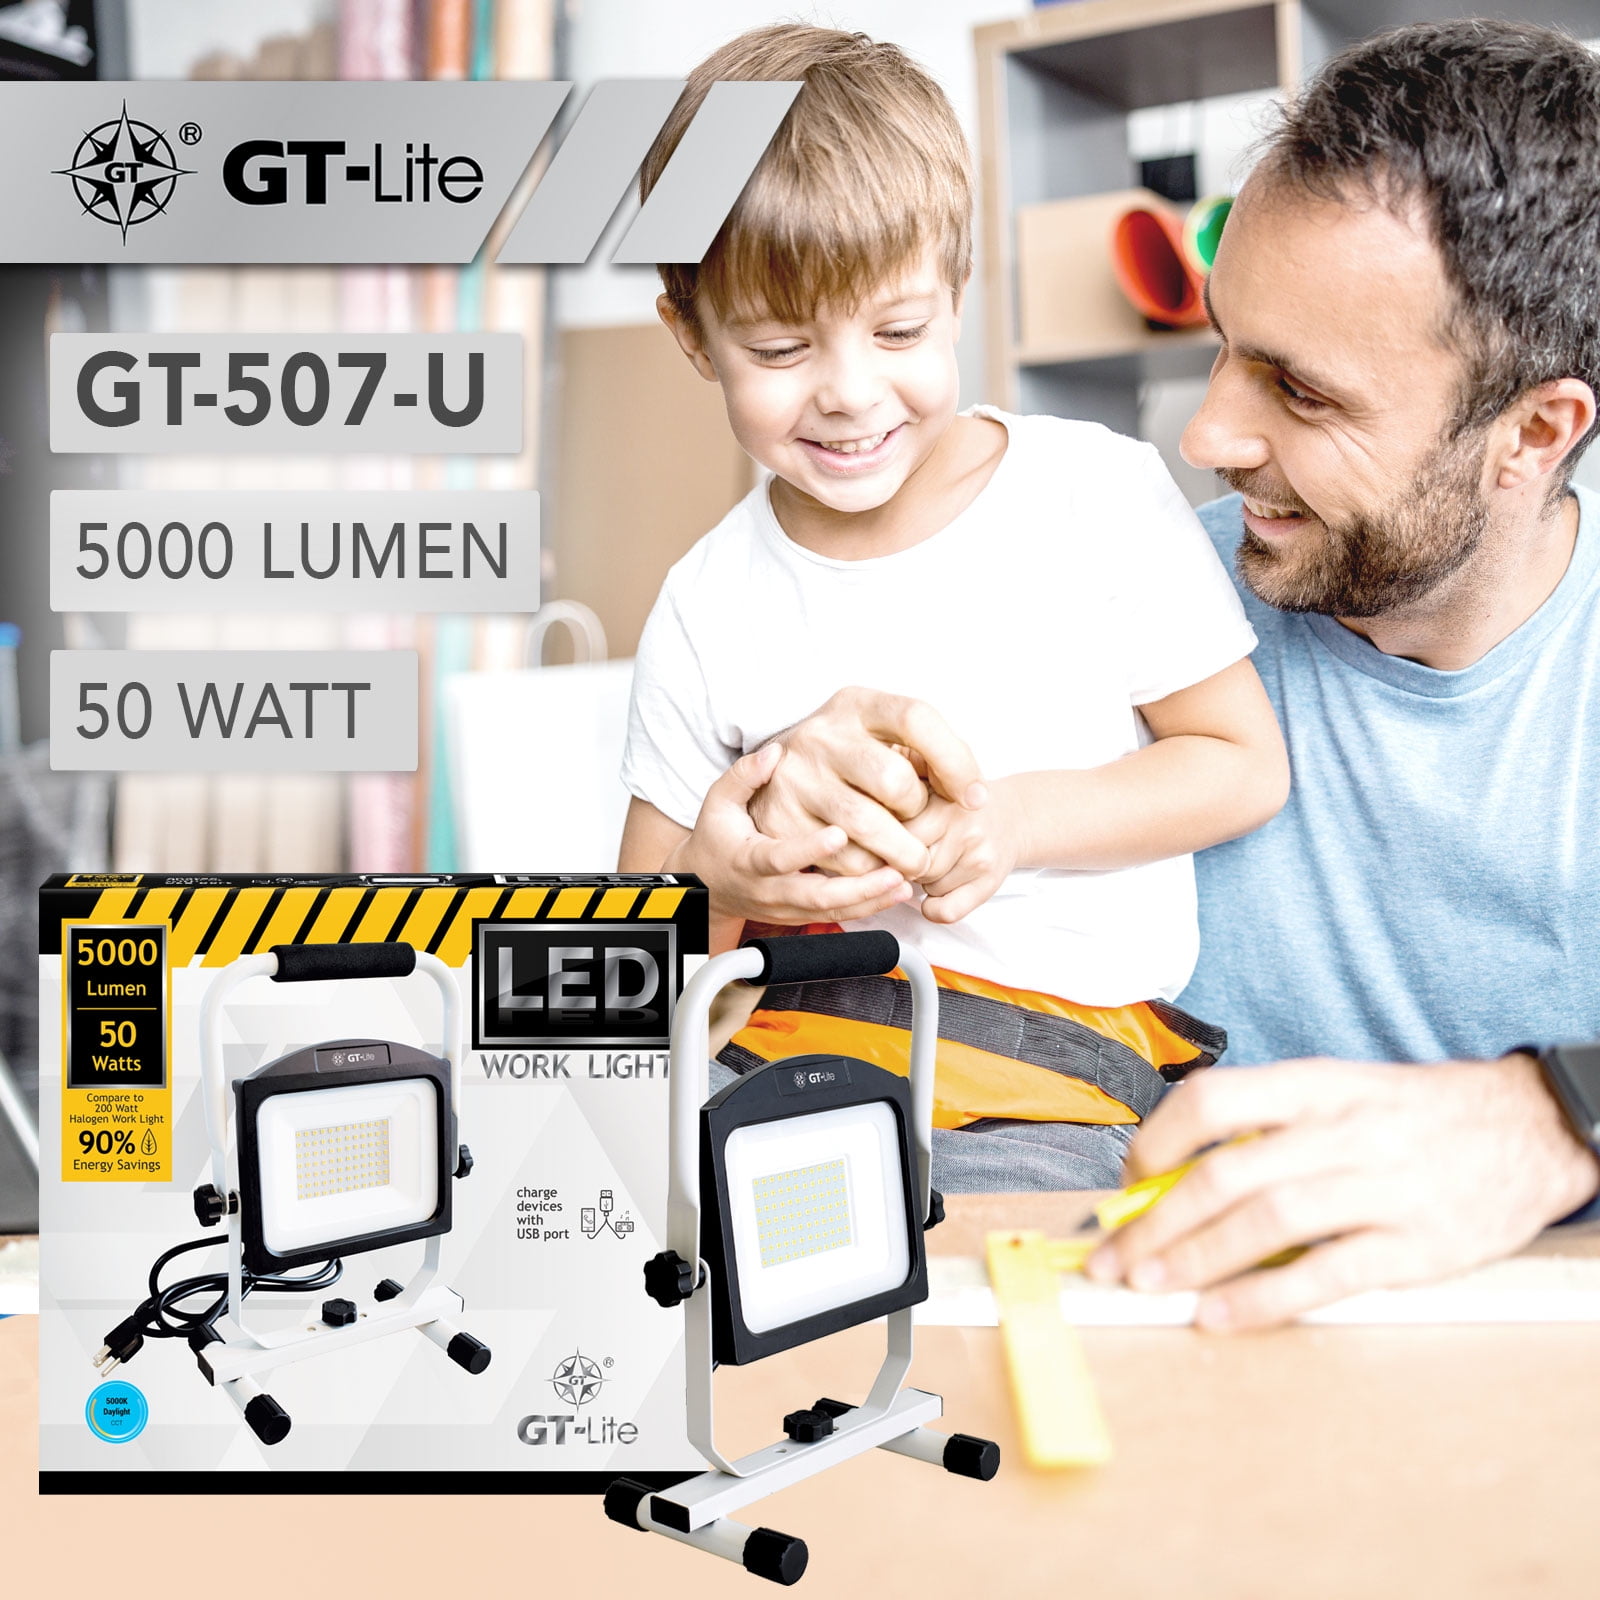 GT-LITE 5,000 Lumens LED Work Light with USB GT-507-U - The Home Depot